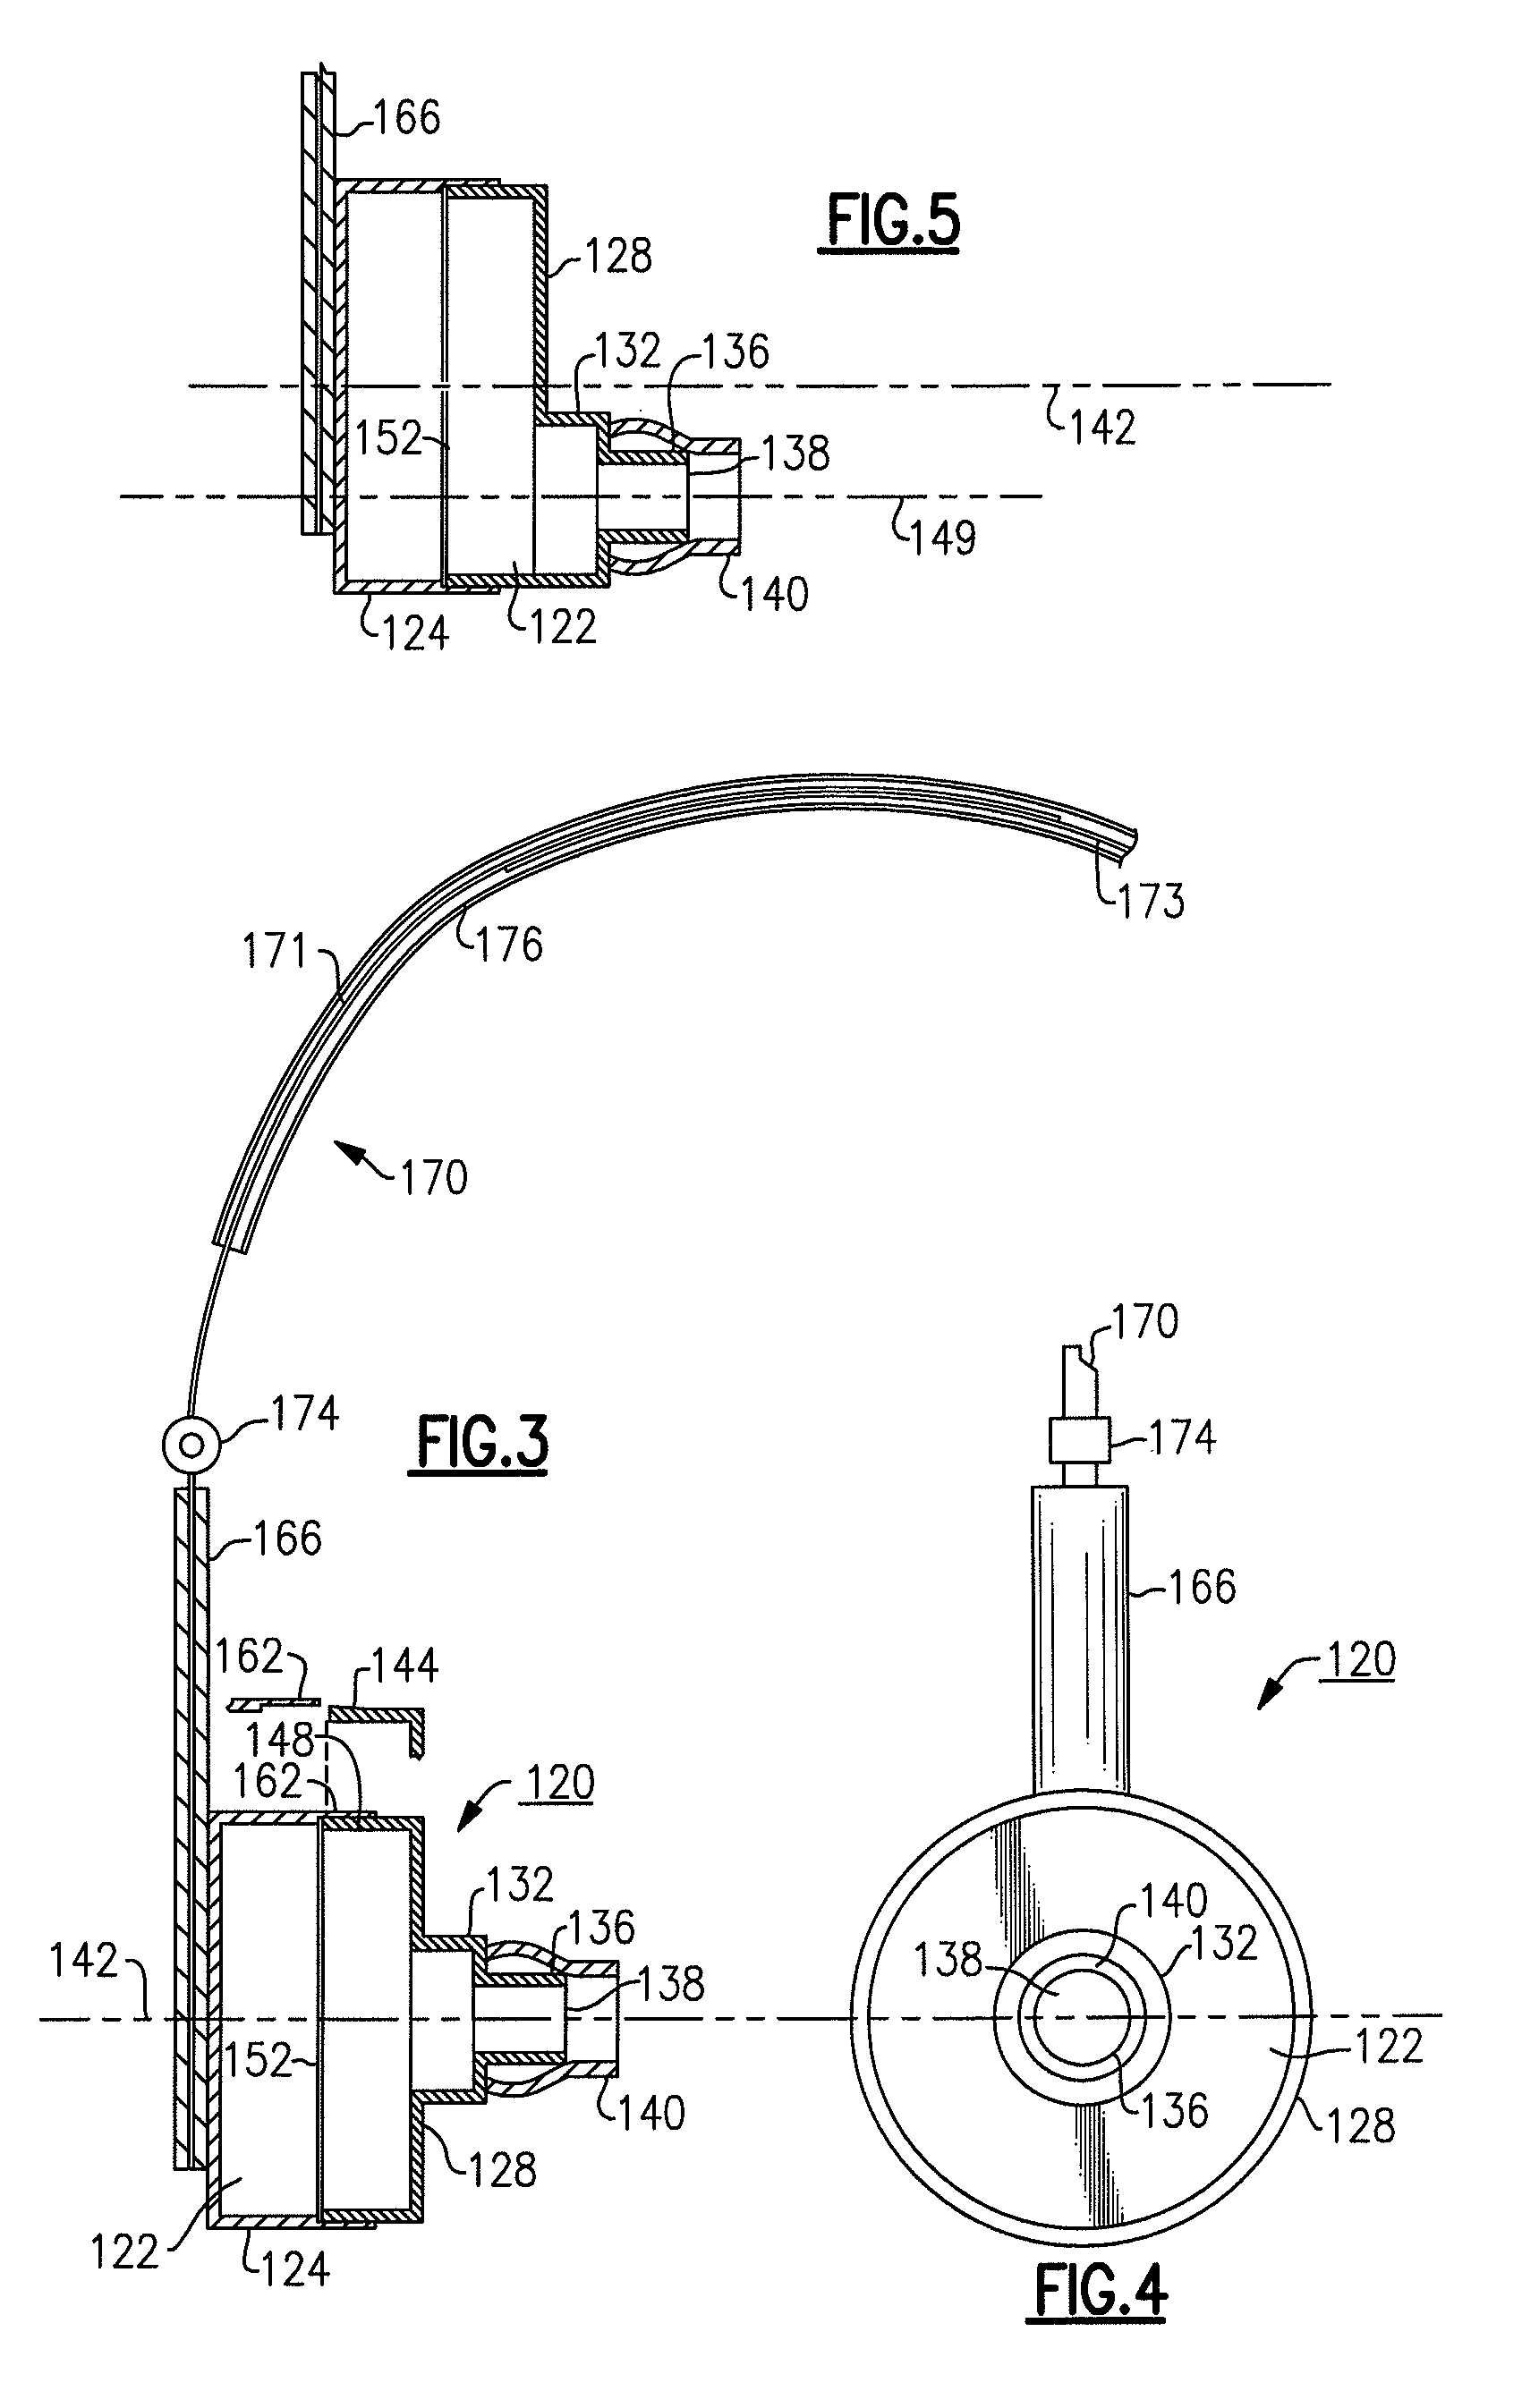 Semi-insert hearing protector having a helmholtz-type resonator